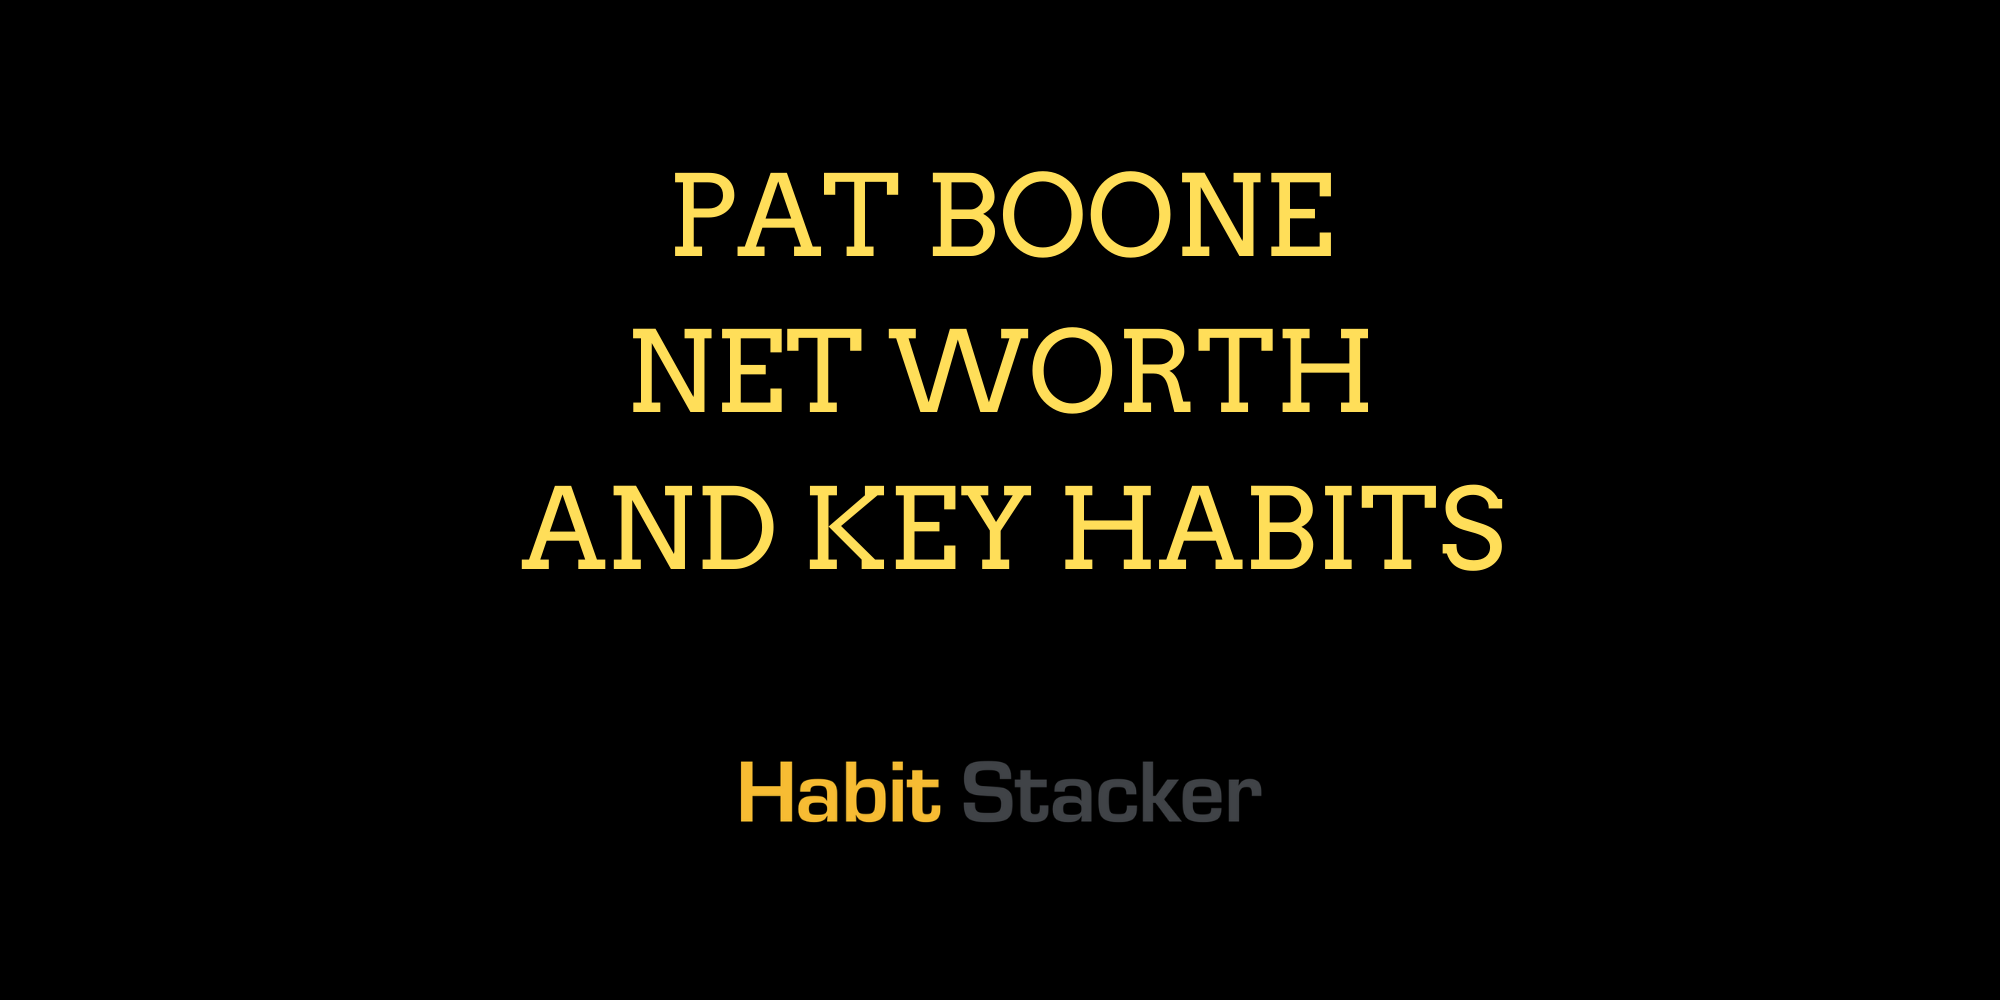 Pat Boone Net Worth And Key Habits